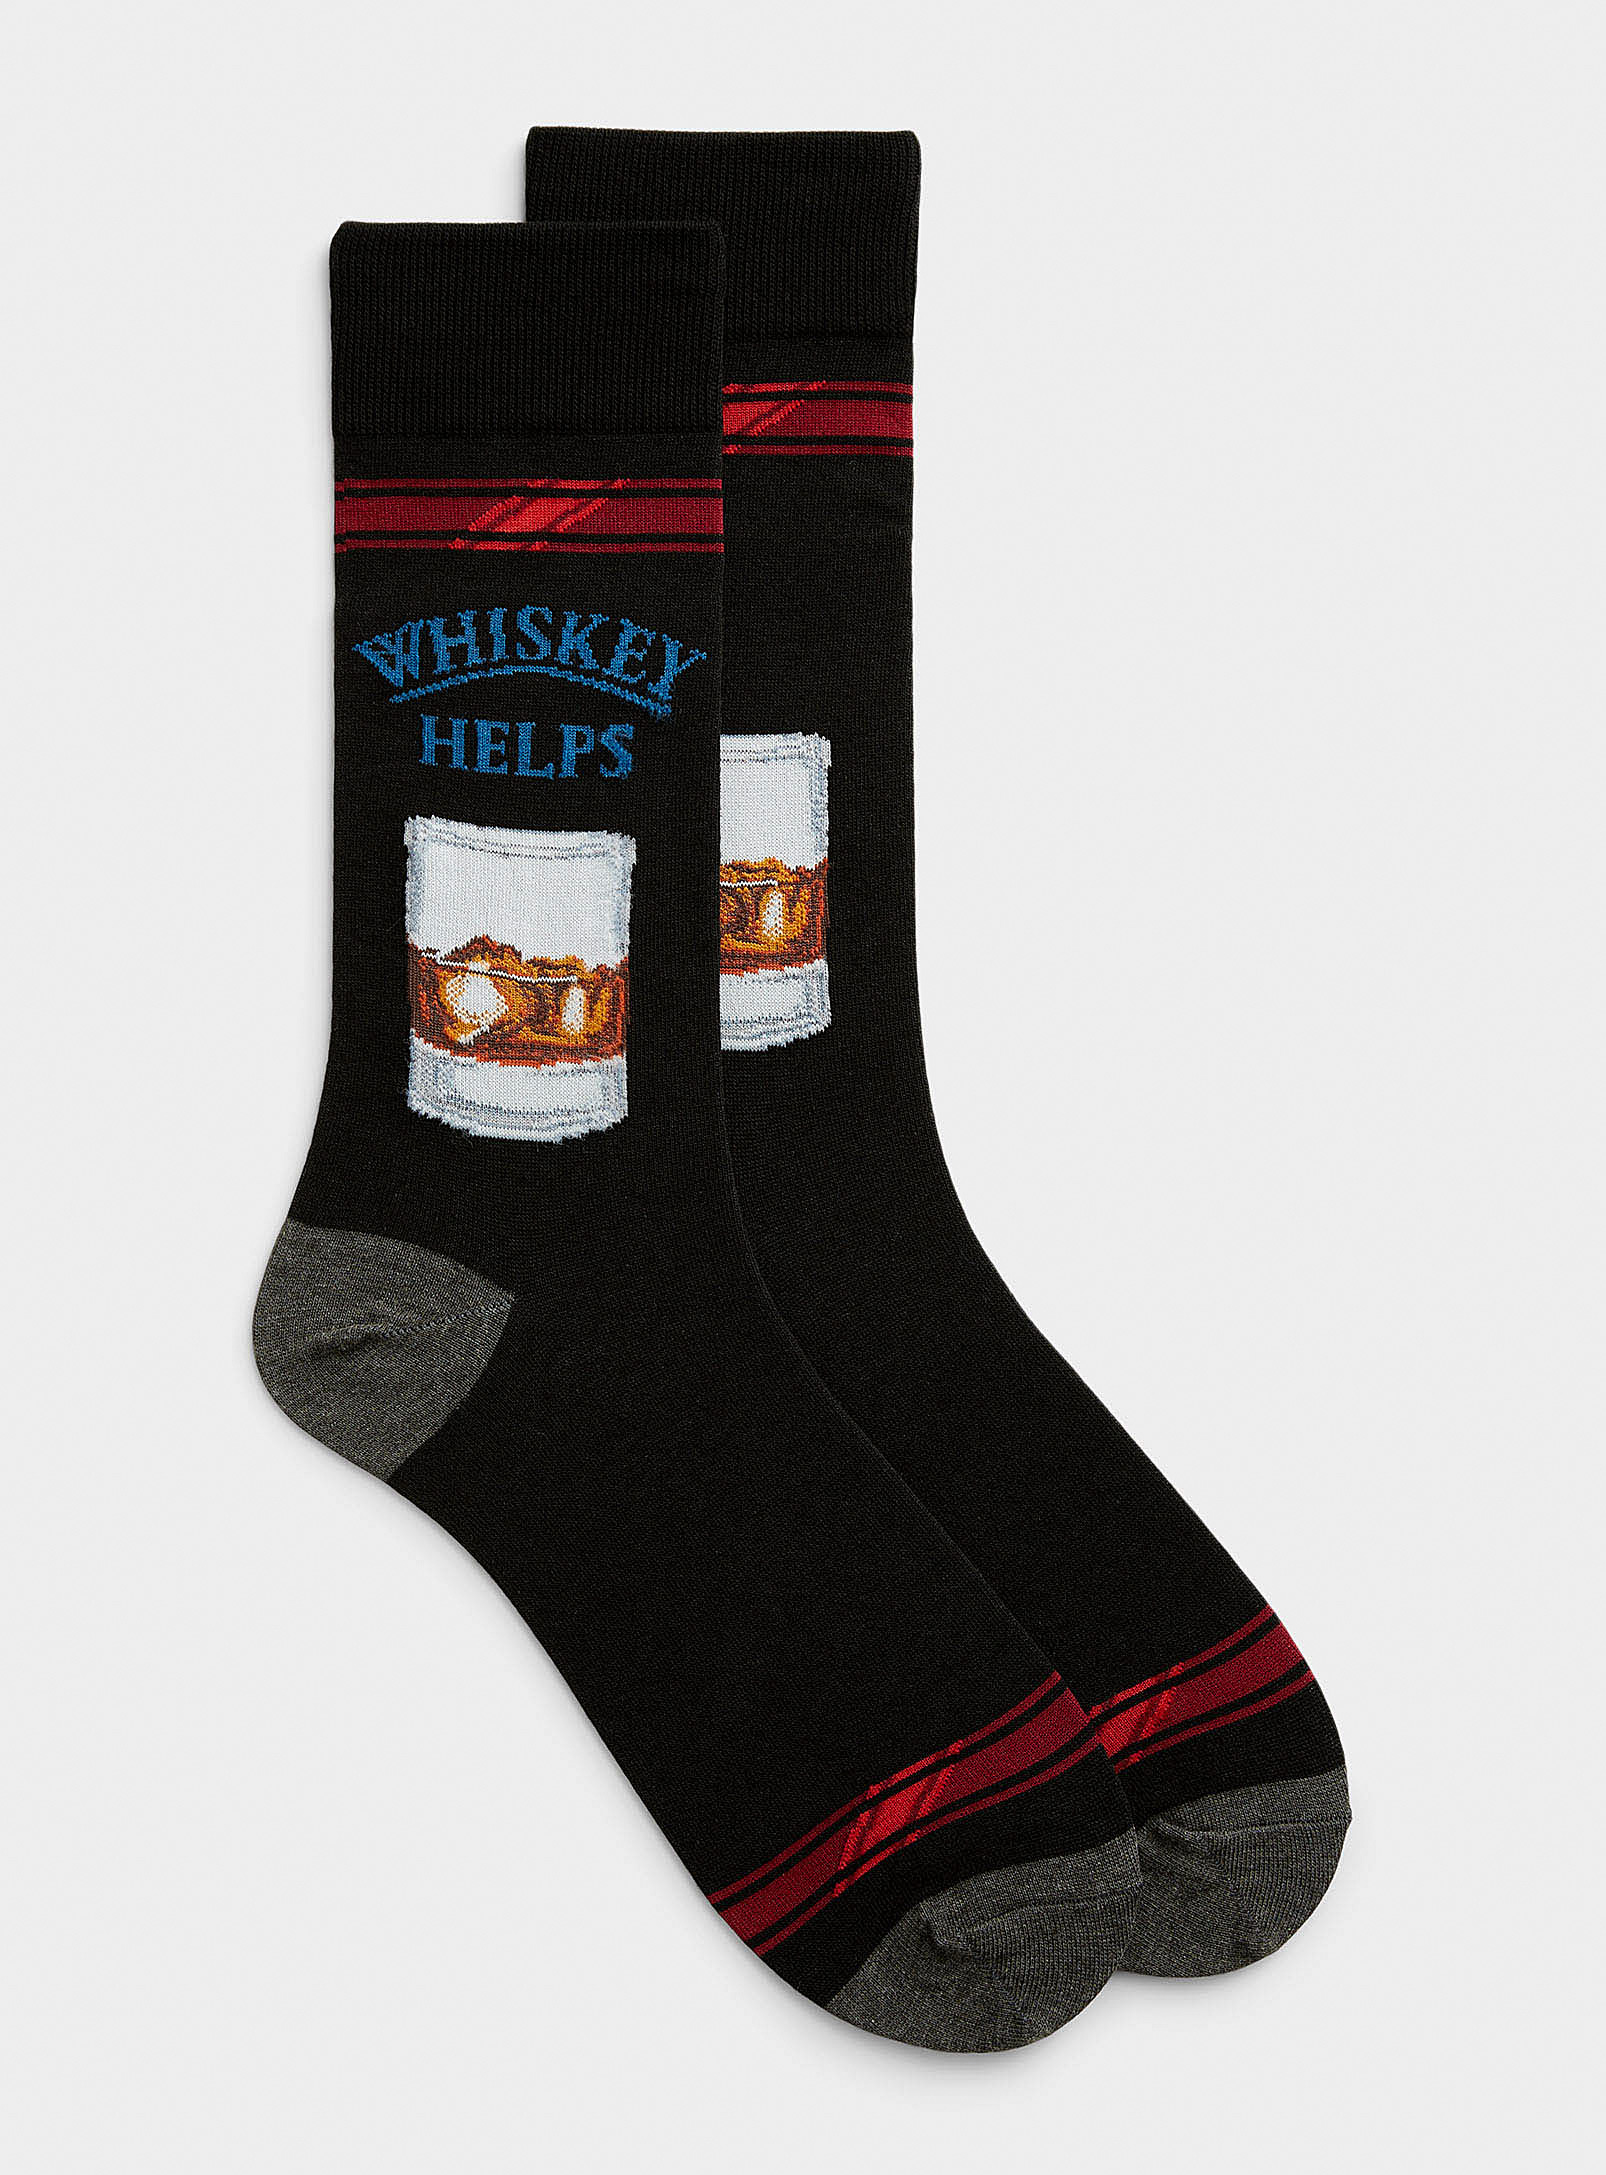 Hot Sox - Men's Whisky sock